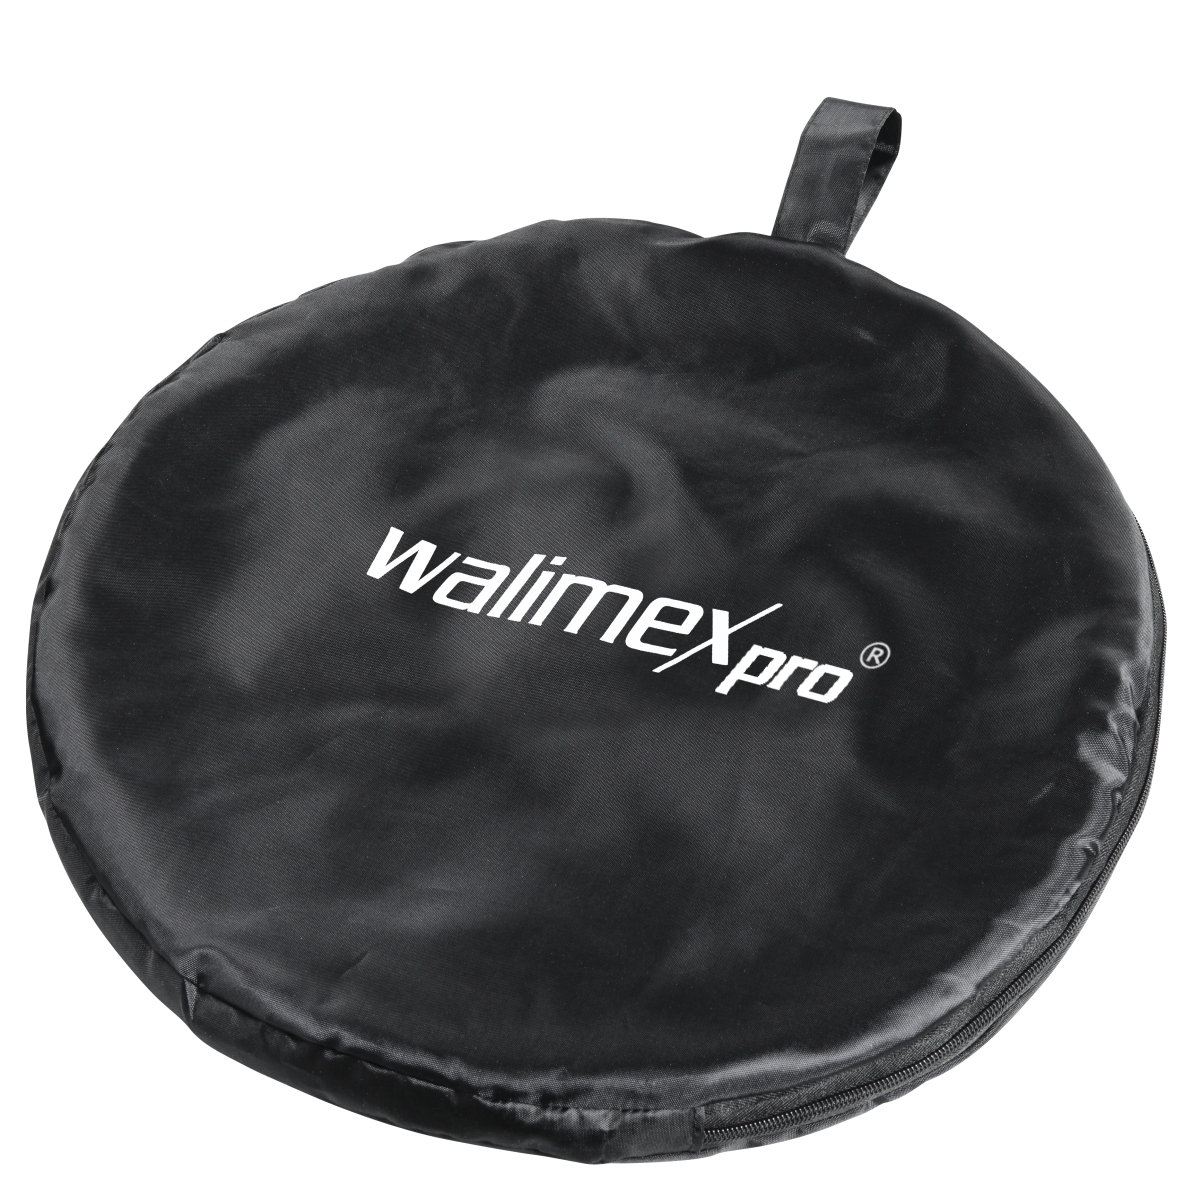 Walimex pro 5in1 Reflektoren Set, 107cm - walimex / walimex pro